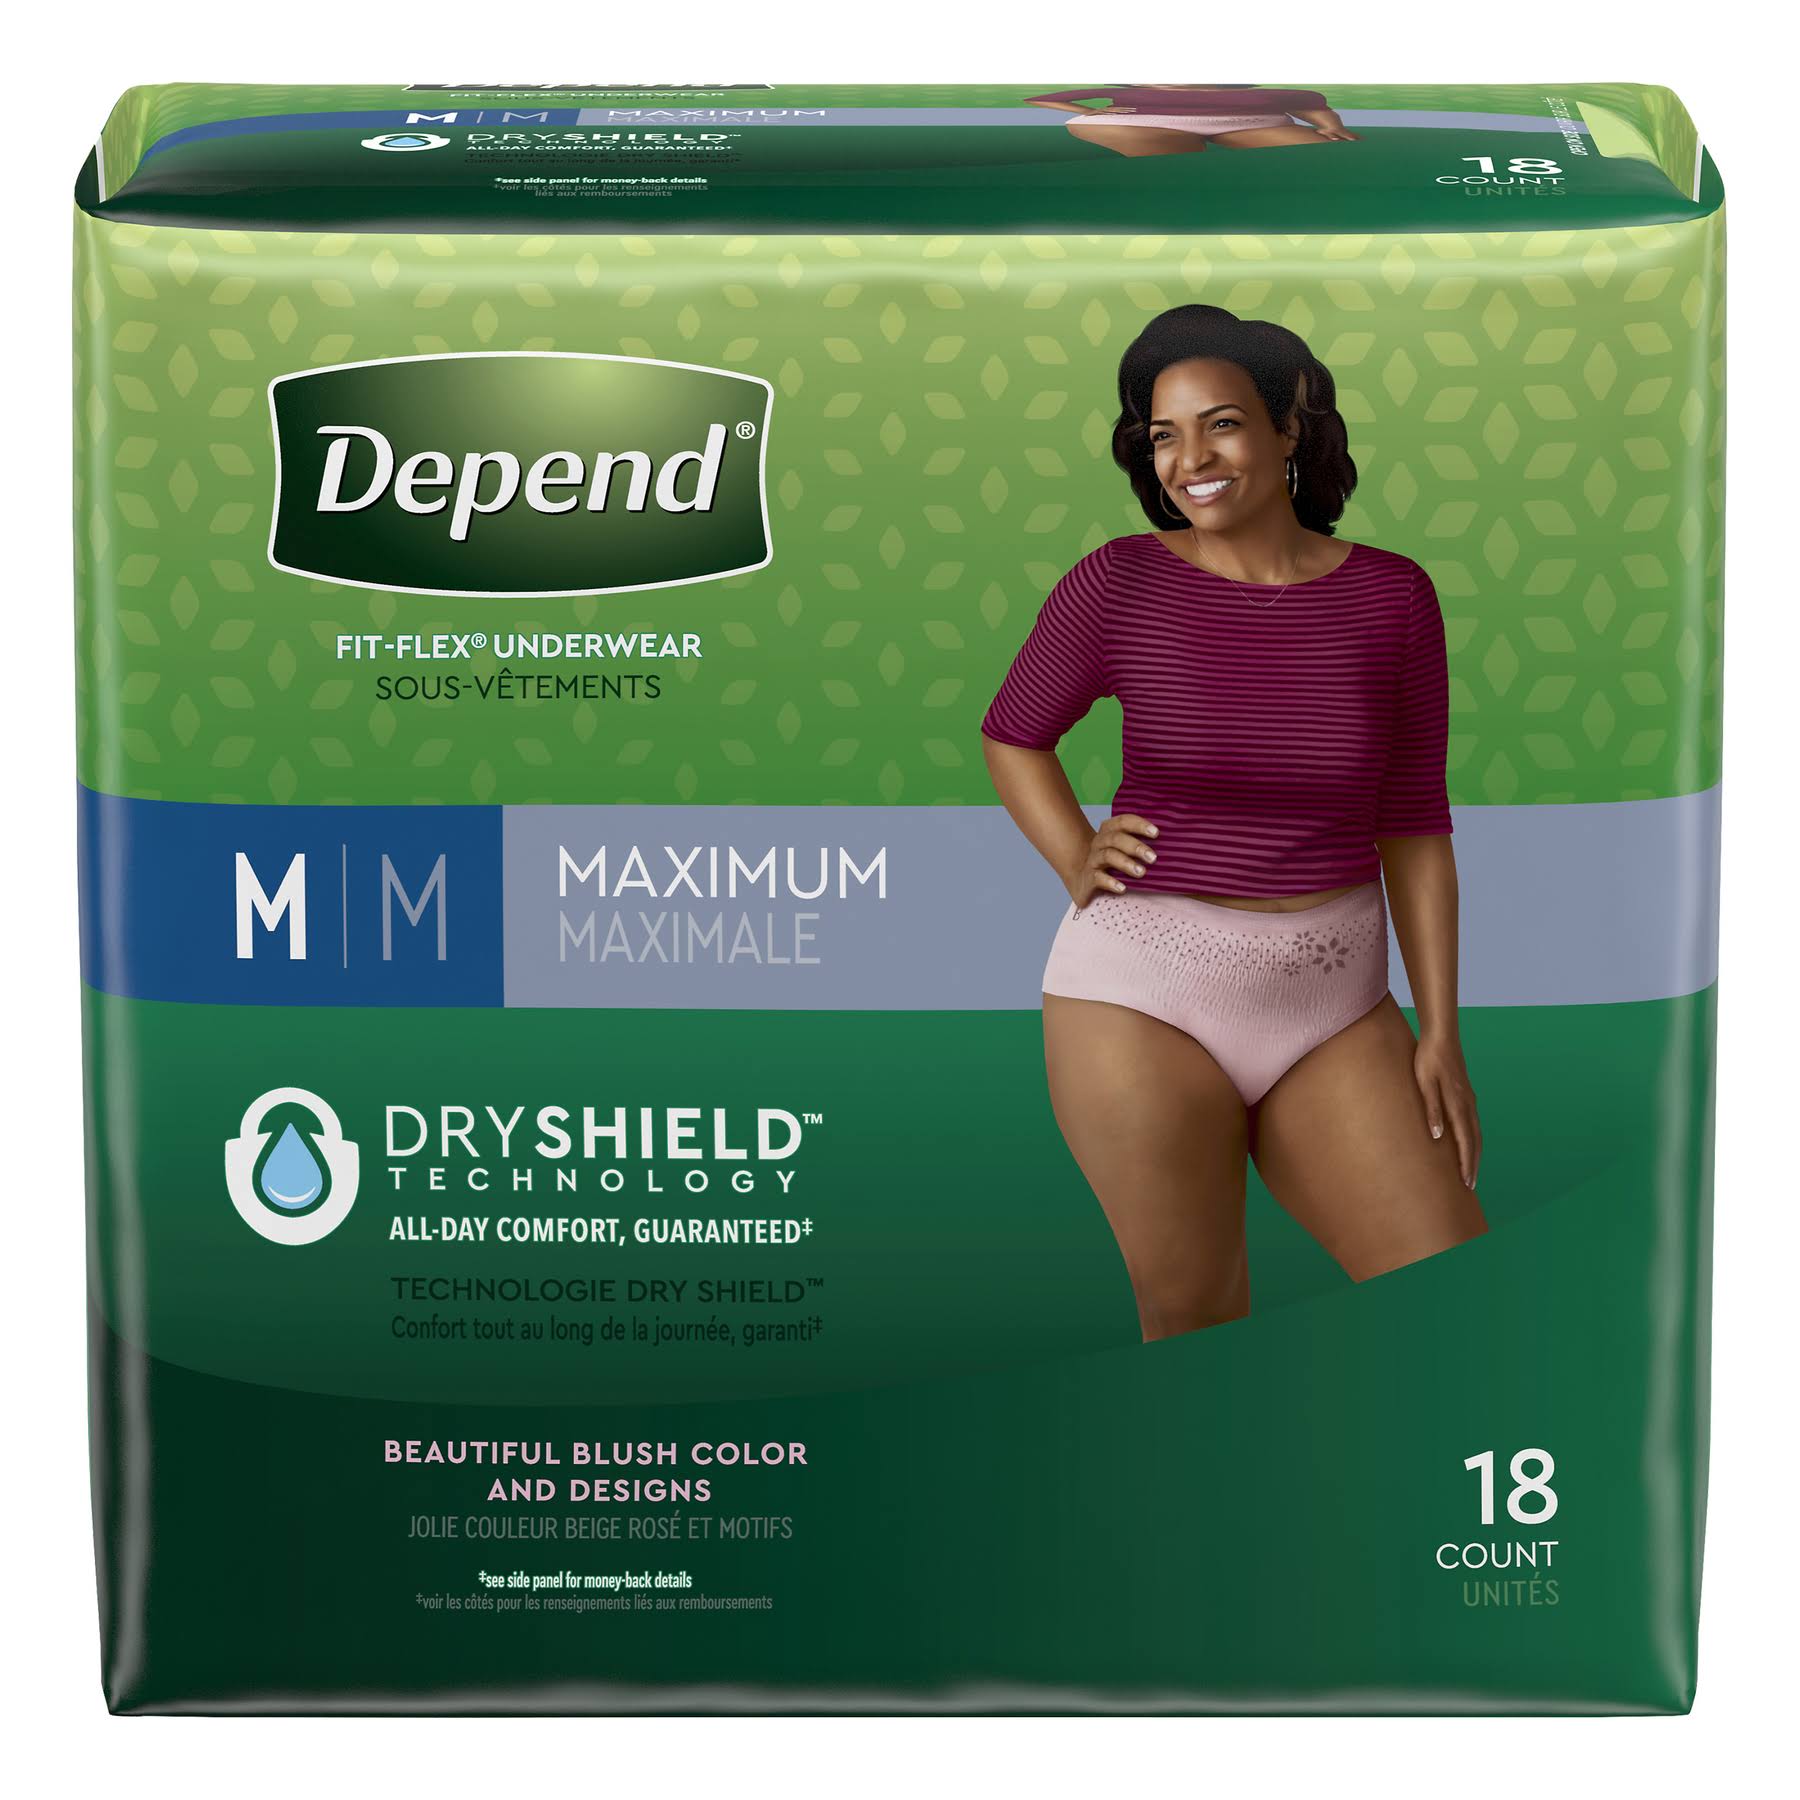 Depend: Women’s Underwear - Maximum Absorbency Medium - 18 Count